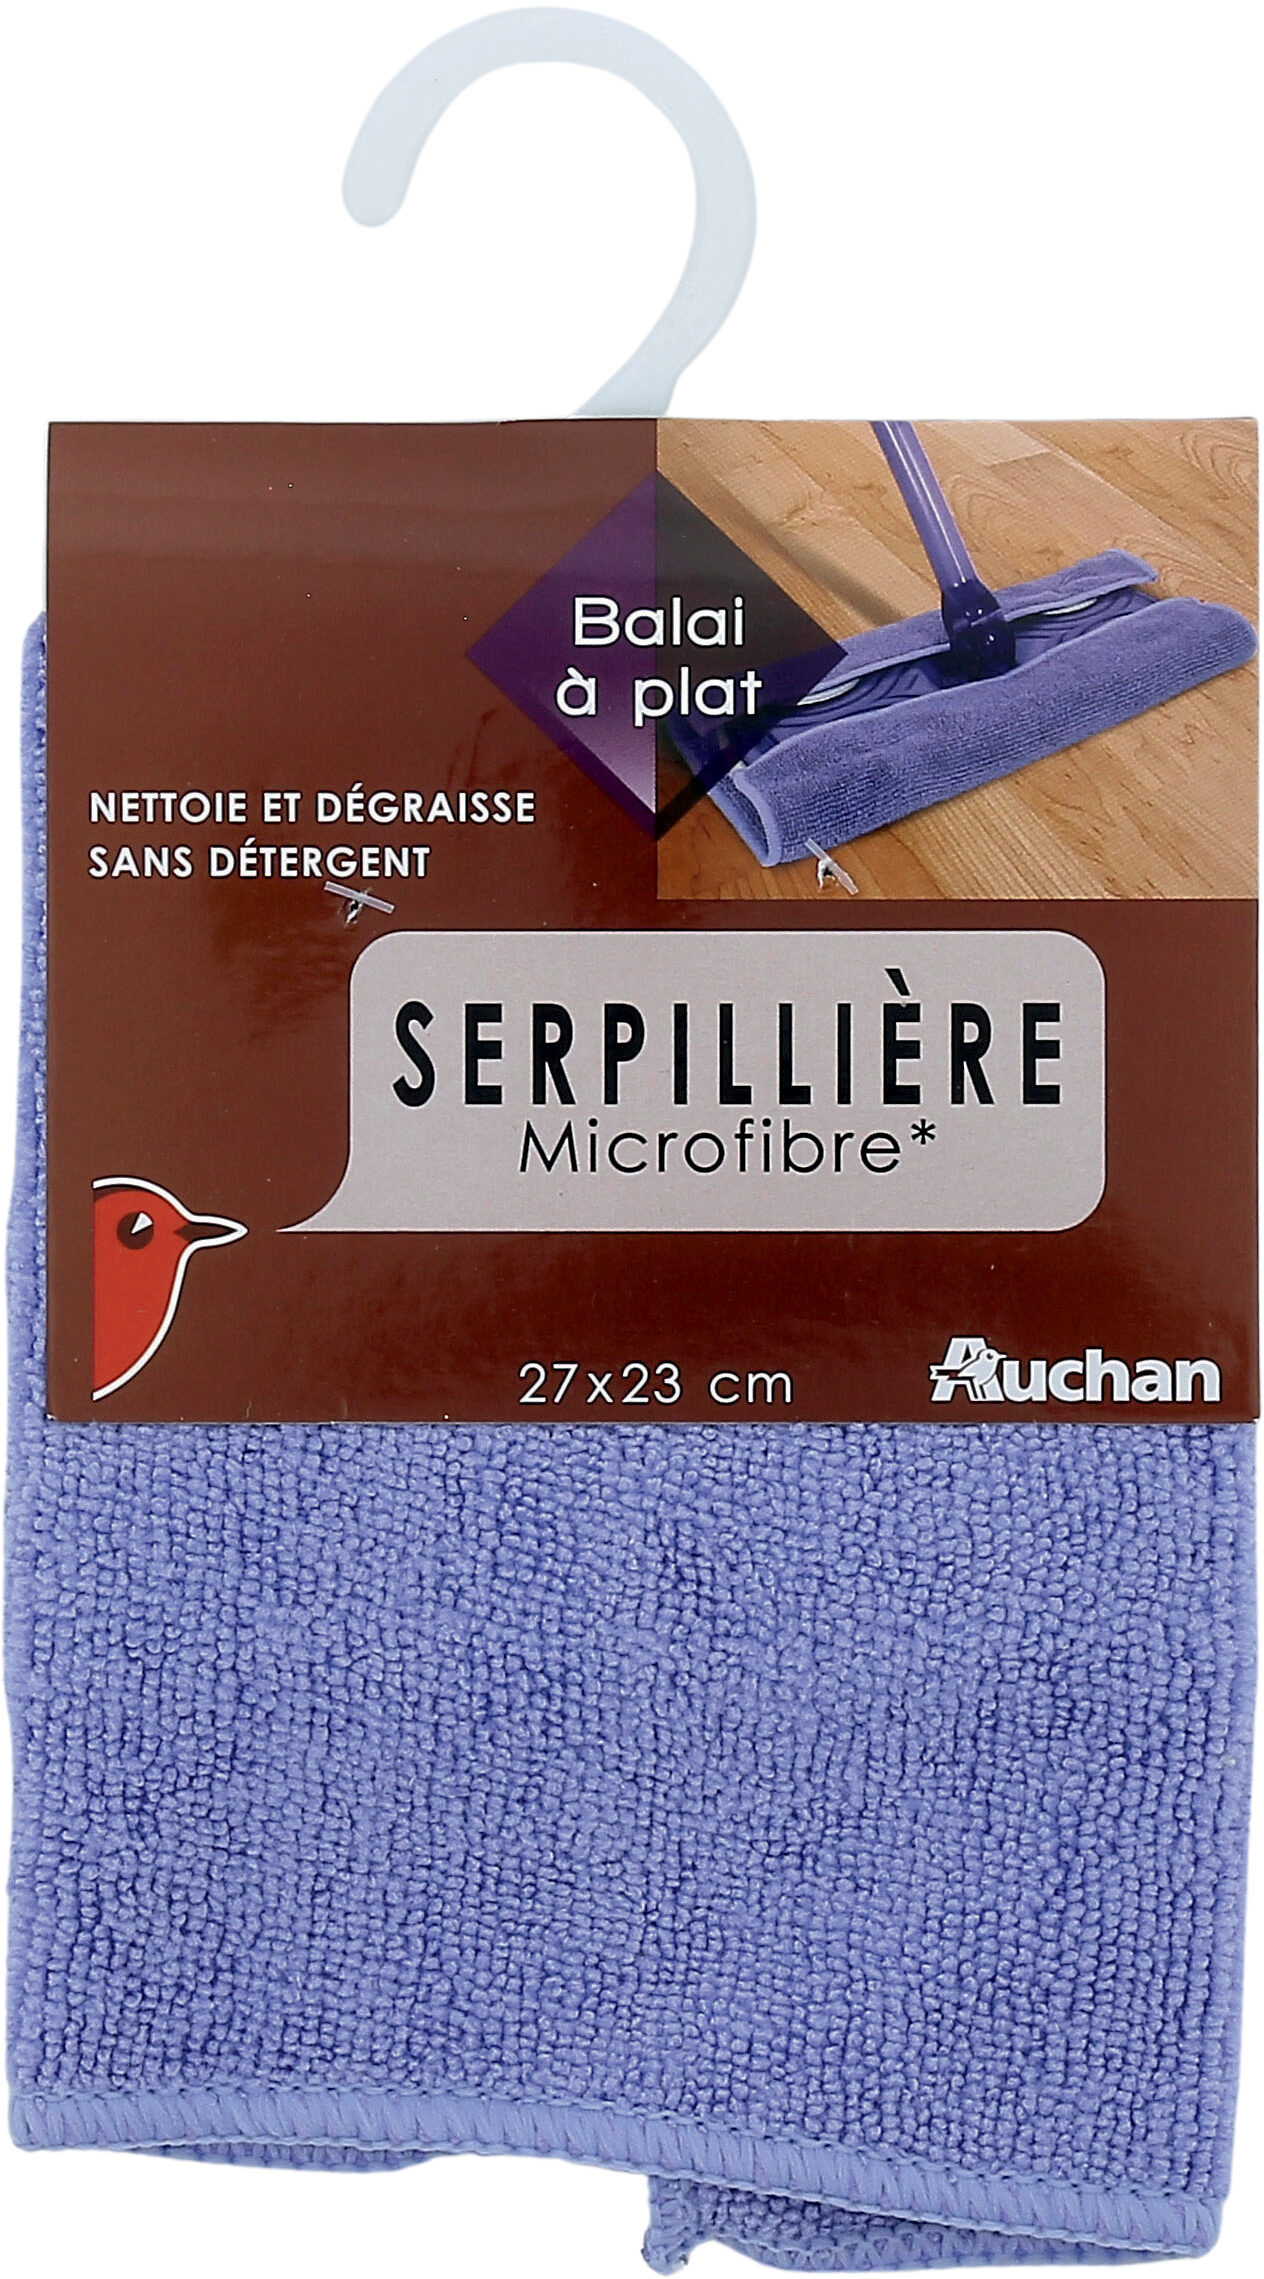 Auchan serpilliere micro fibre bouclee balai plat 27x23cm - Produit - fr